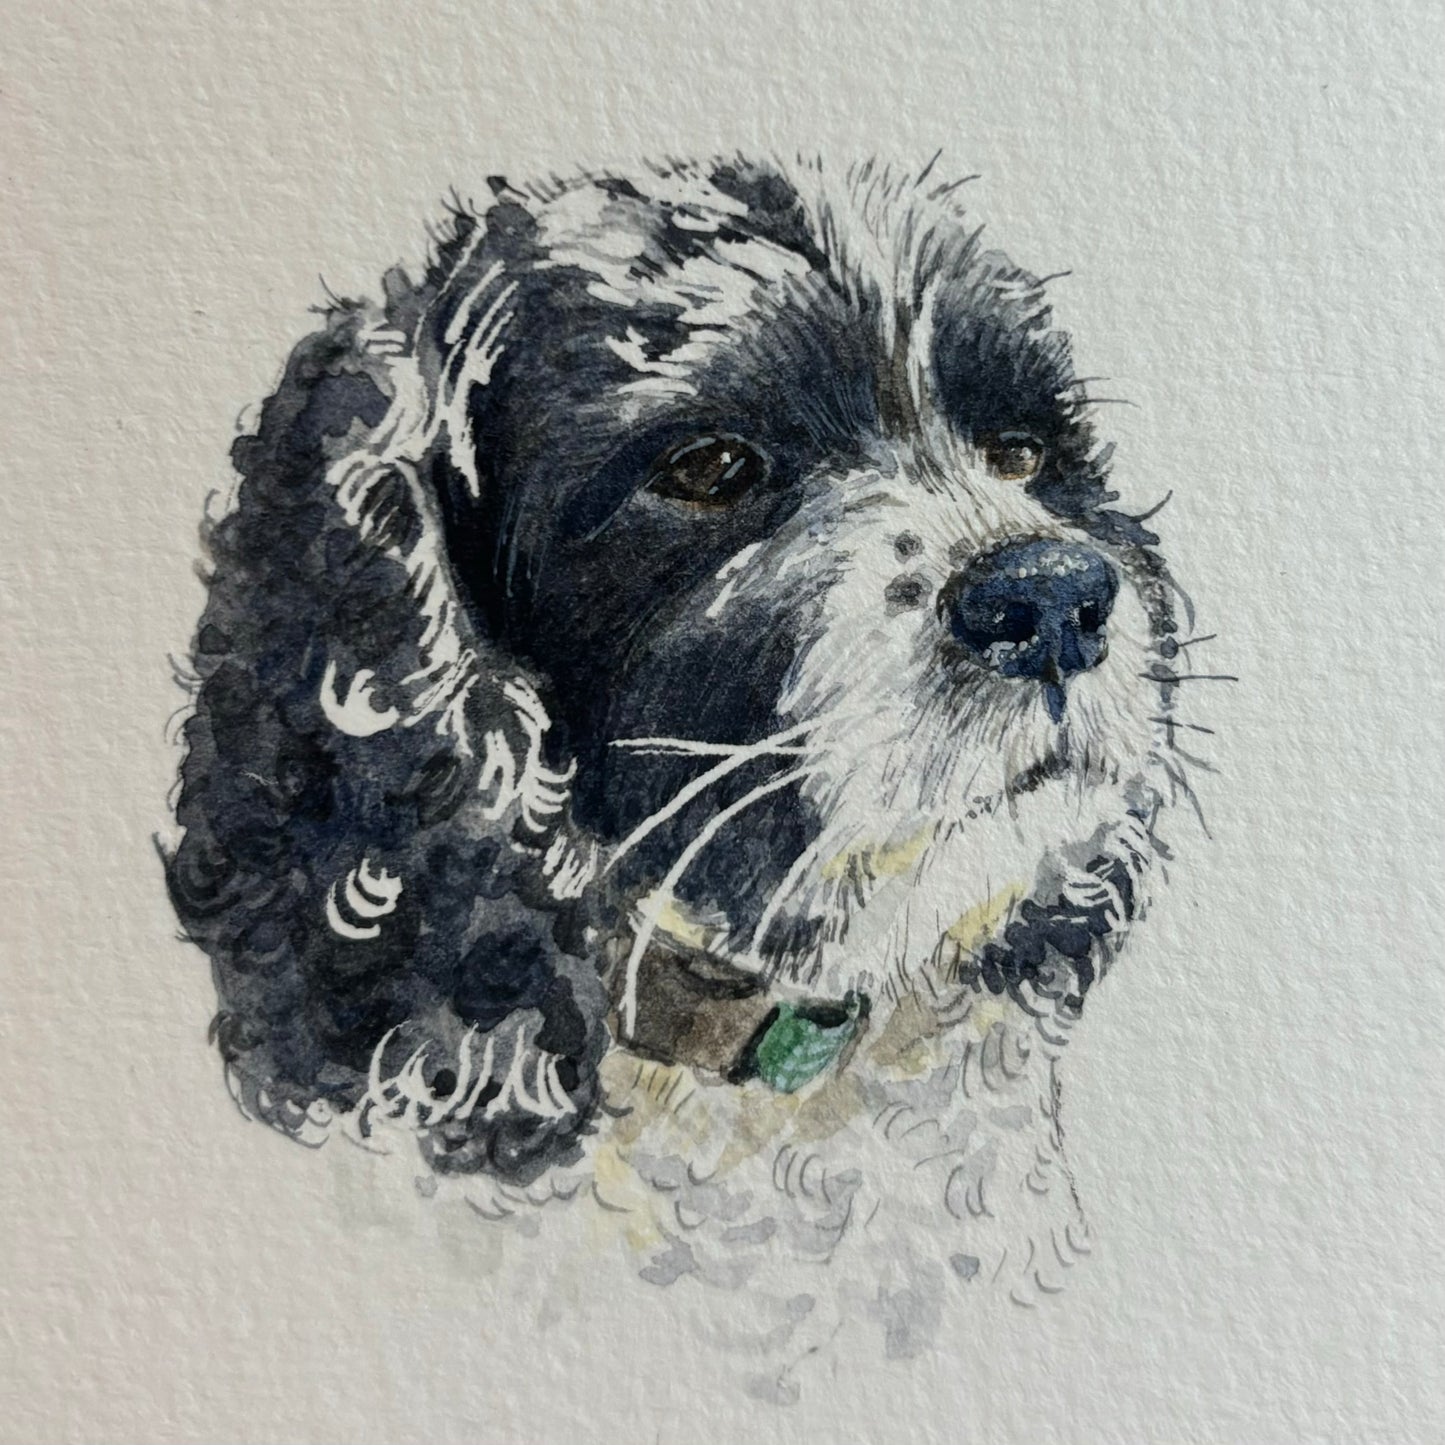 Custom Miniature Pet Portraits by Lucy